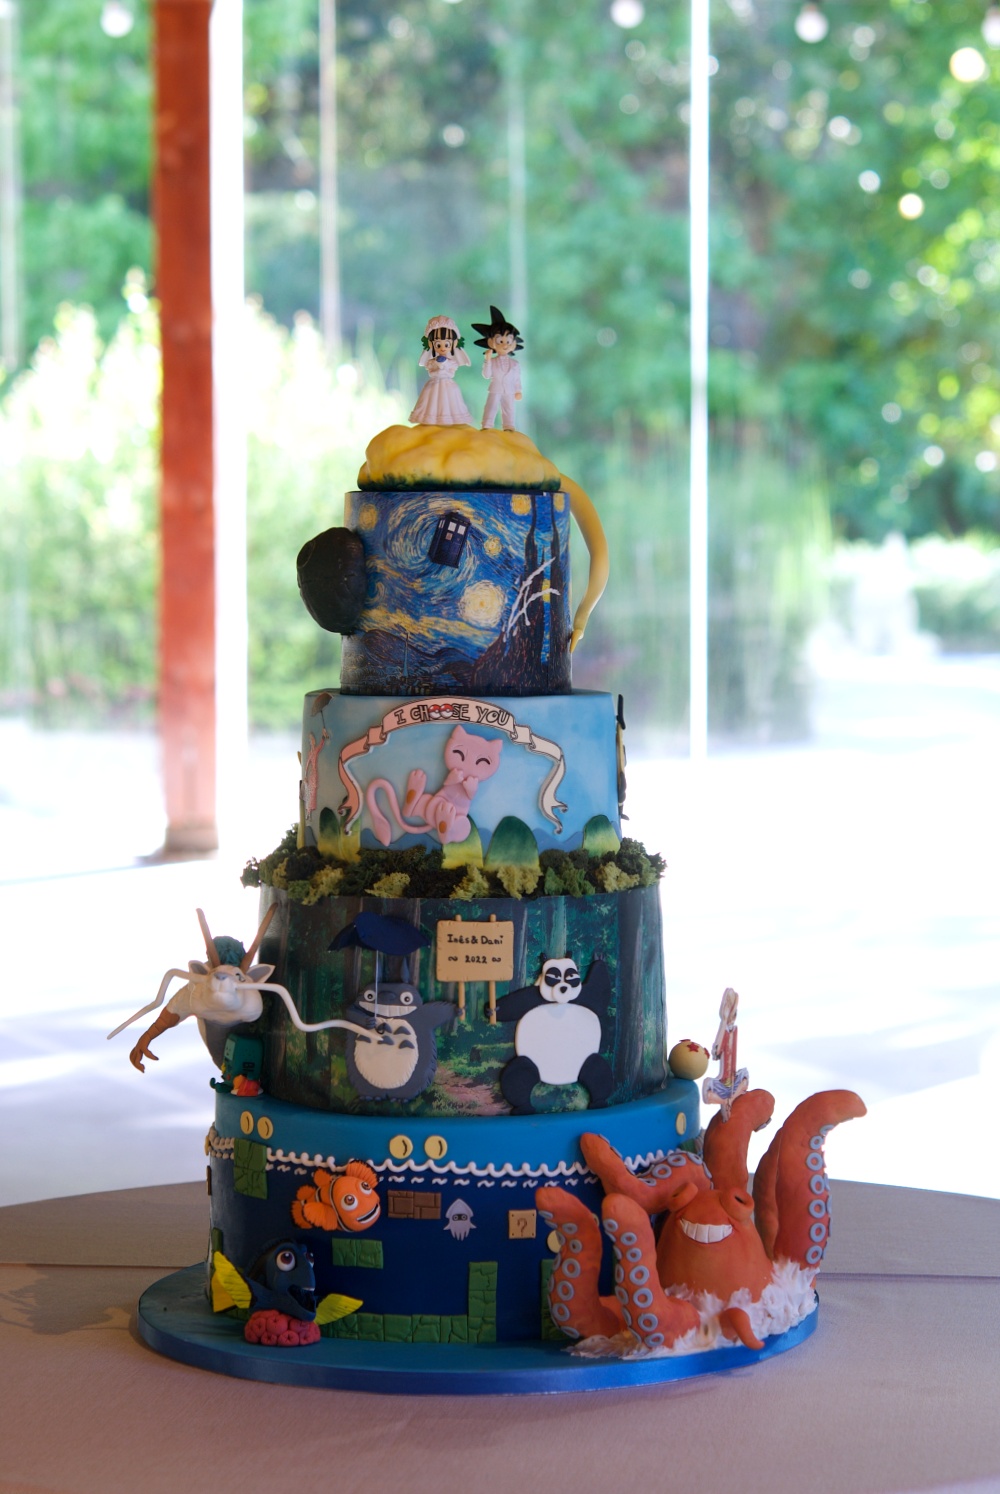 geek wedding cake, tarta boda friki, mericakes, anime cake, Totoro, Ranma, Nemo, Goku, Pokemon, Star wars, One piece, red Velvet, wedding cake